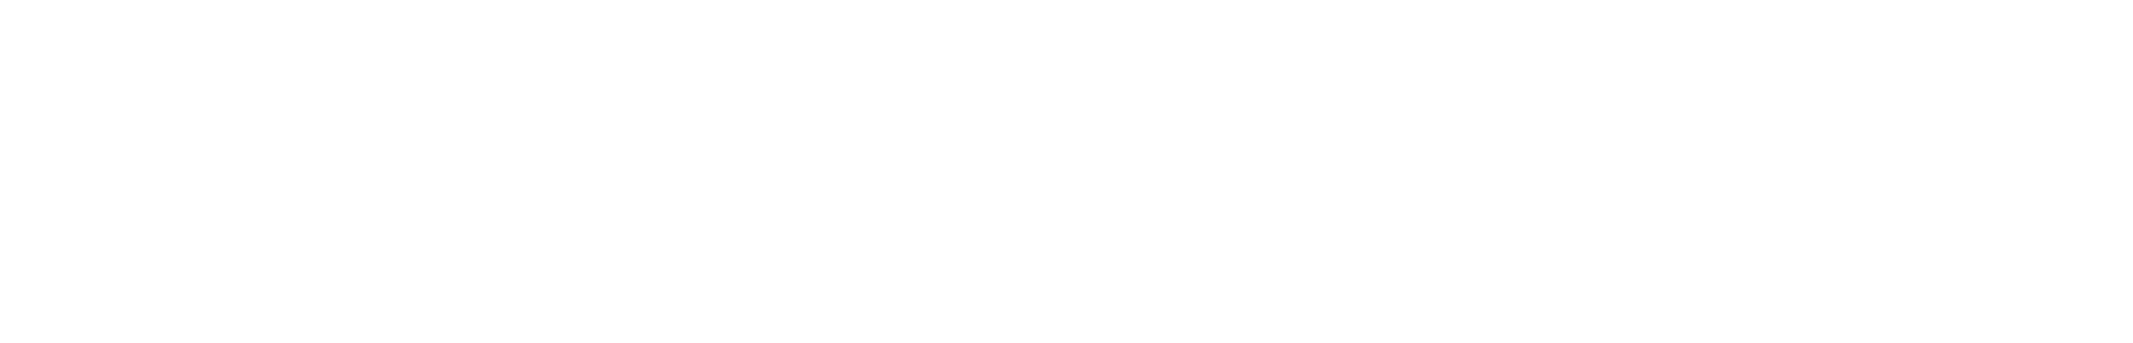 Innovation Magazine - AGRITECHNICA